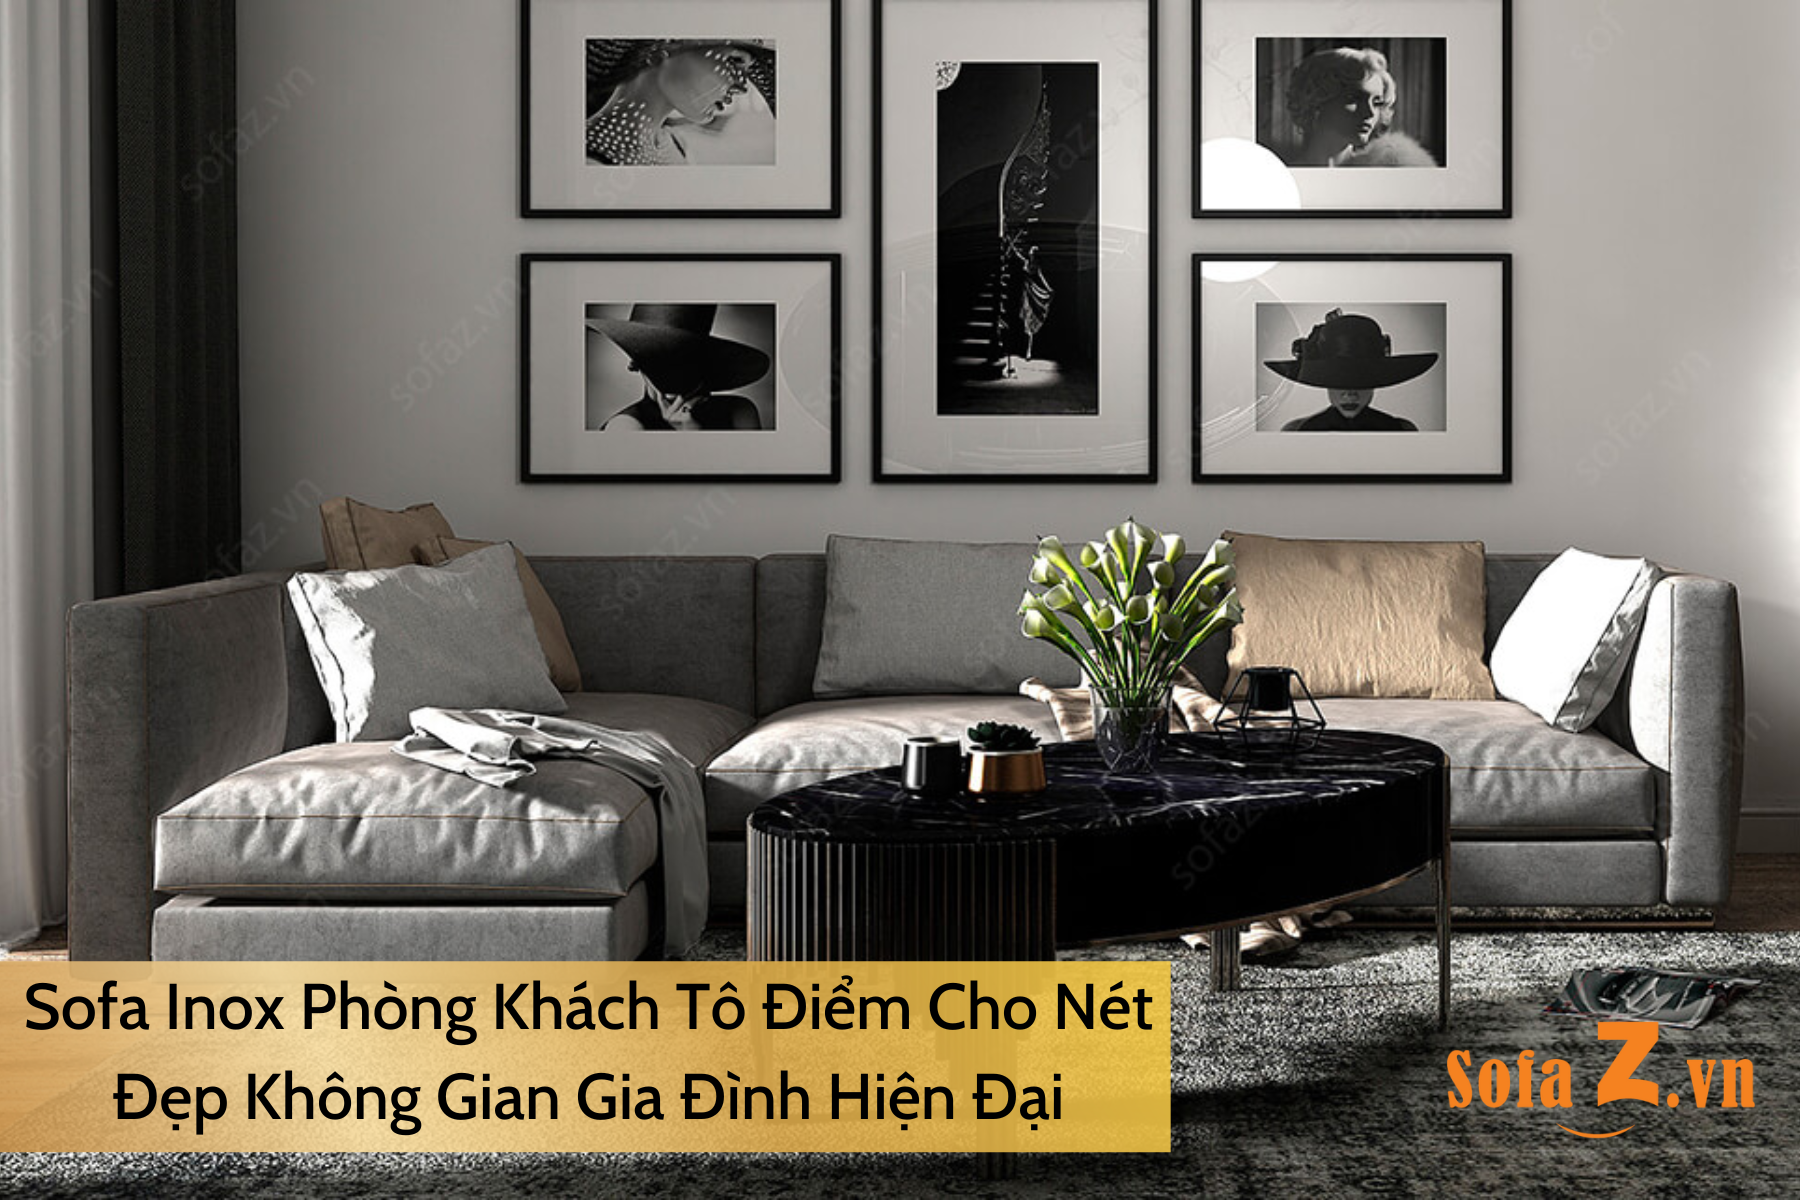 sofa-inox-phong-khach-to-diem-cho-net-dep-khong-gian-gia-dinh-hien-dai.html